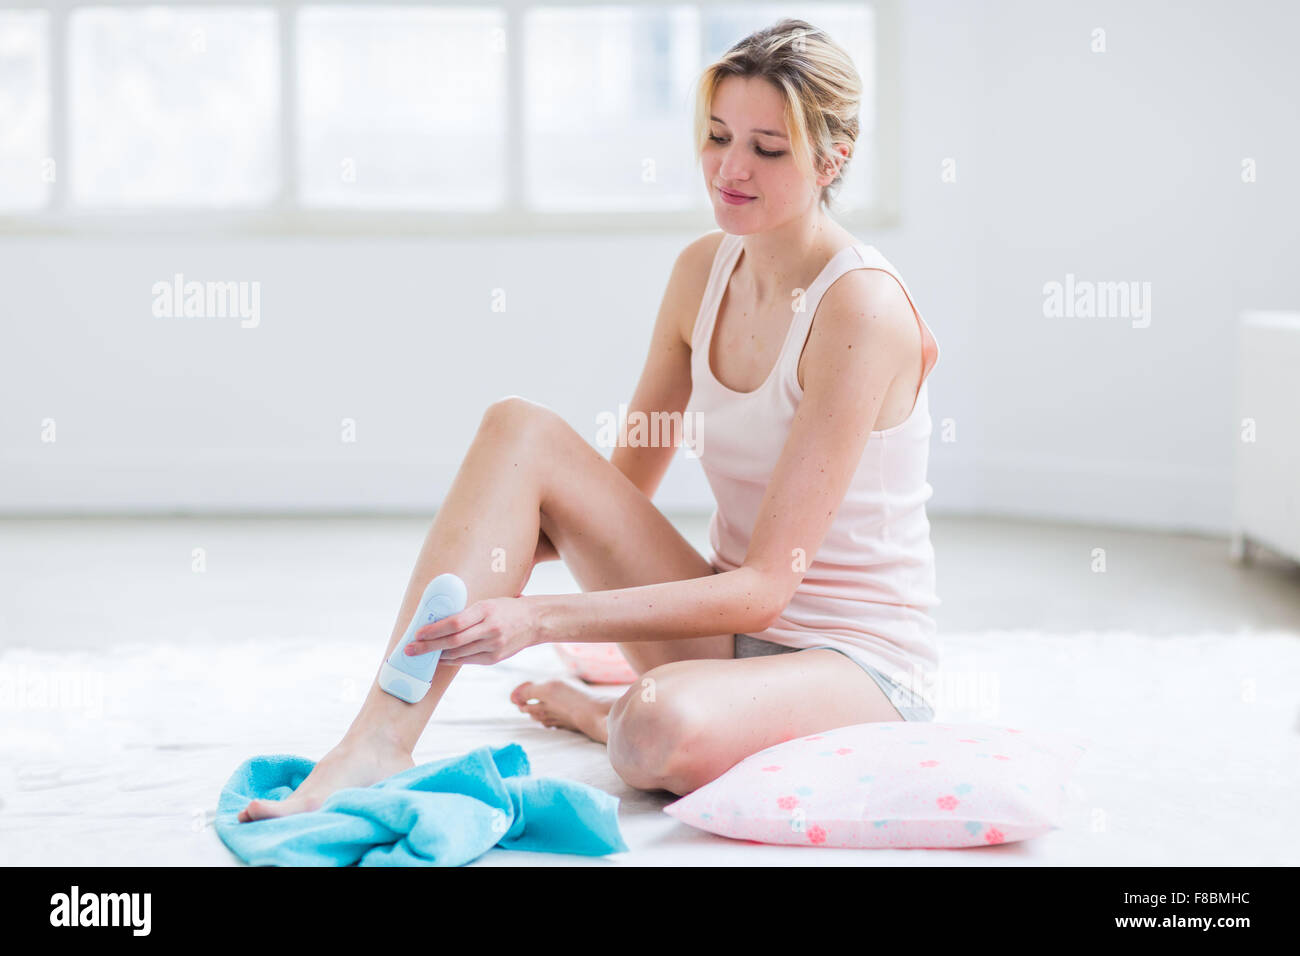 Woman shaving her legs. Stock Photo